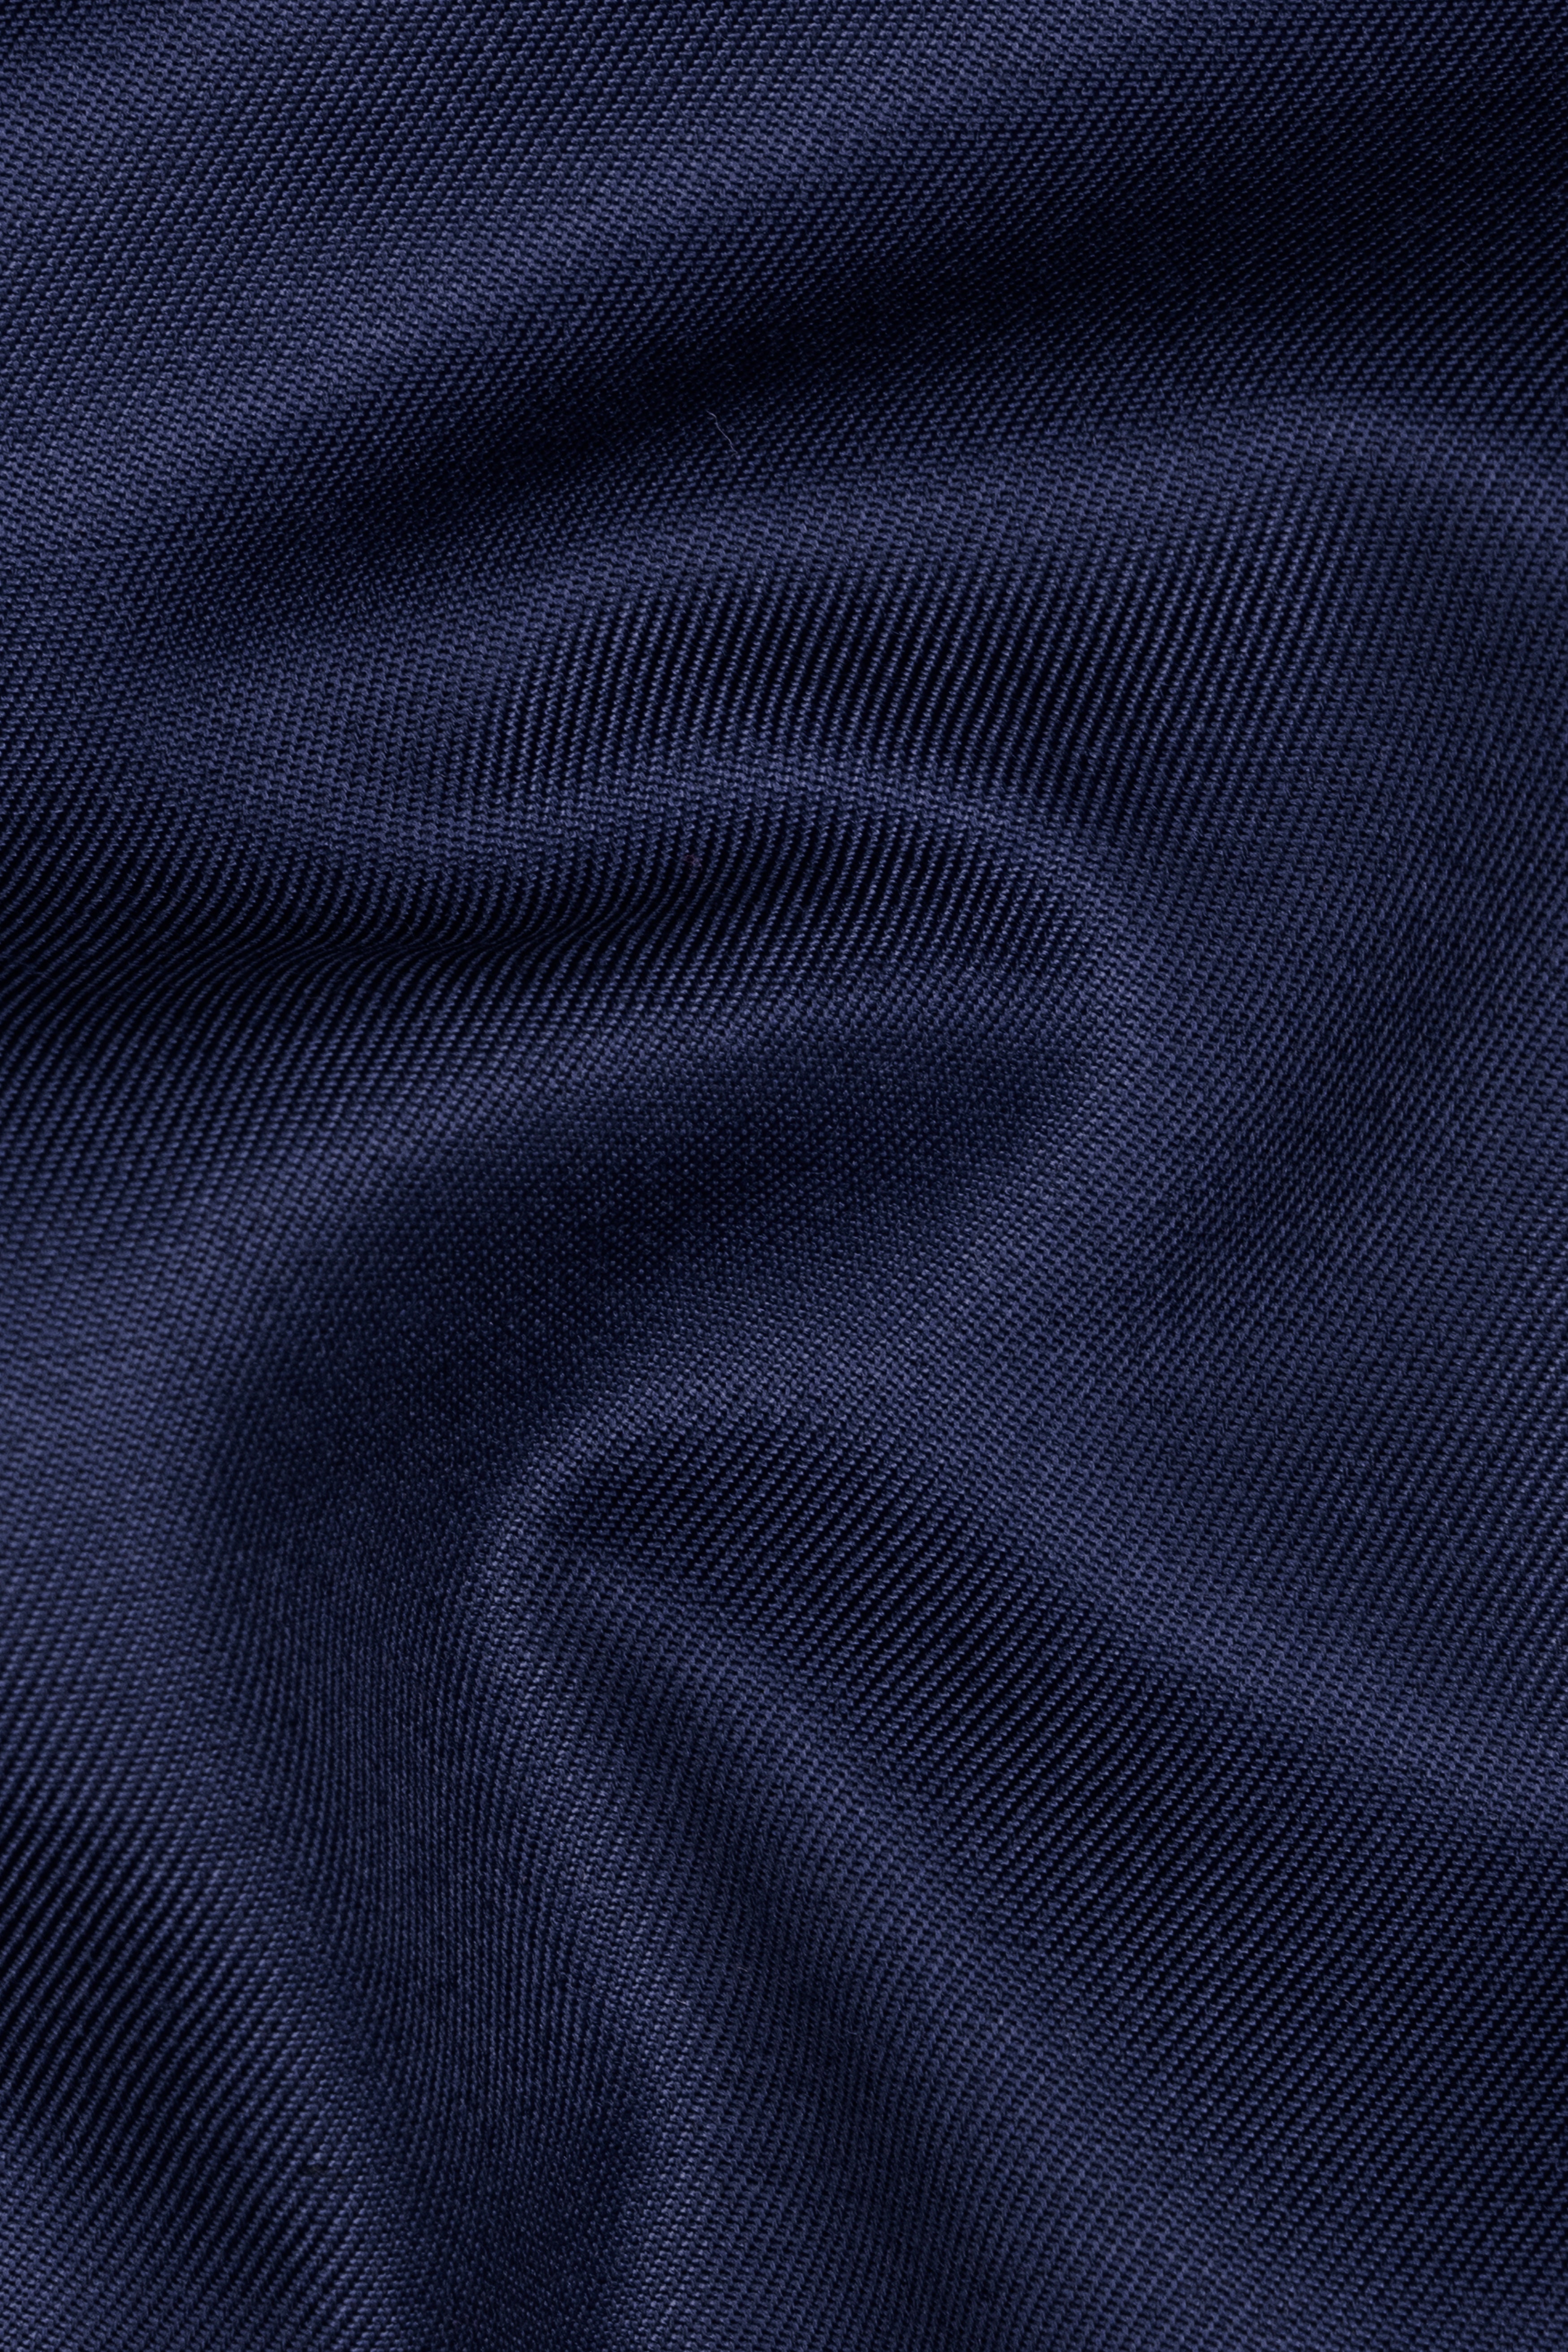 Tealish Blue Plain Solid Wool Blend Blazer